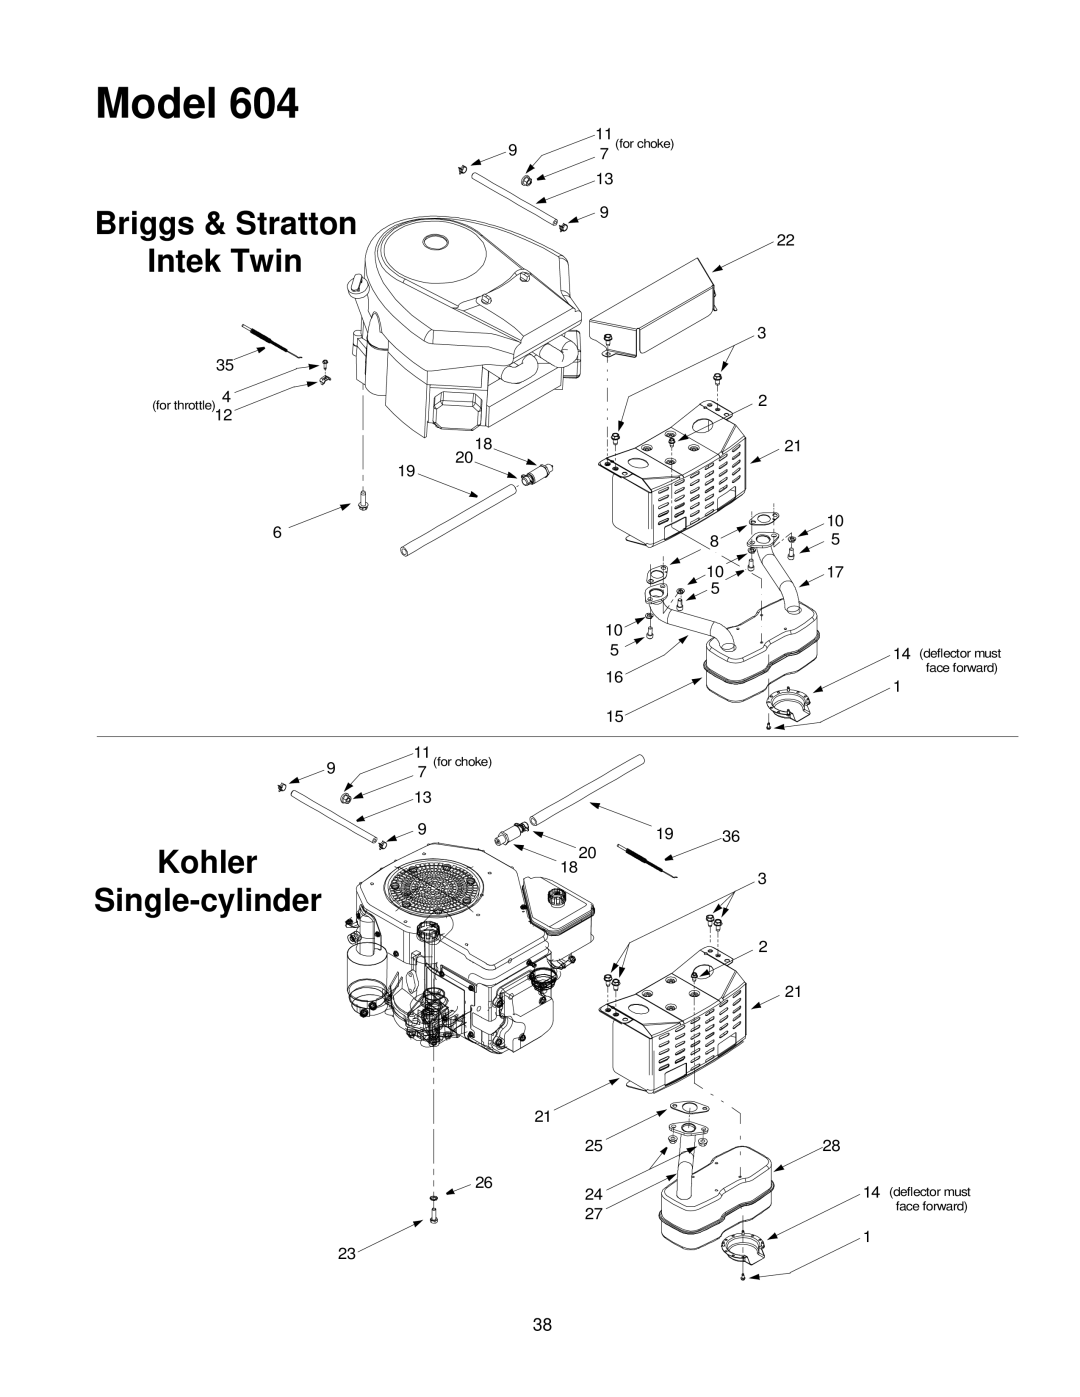 Troy-Bilt 604 Briggs & Stratton Intek Twin, Kohler Single-cylinder, Model, for throttle124, deflector must, face forward 